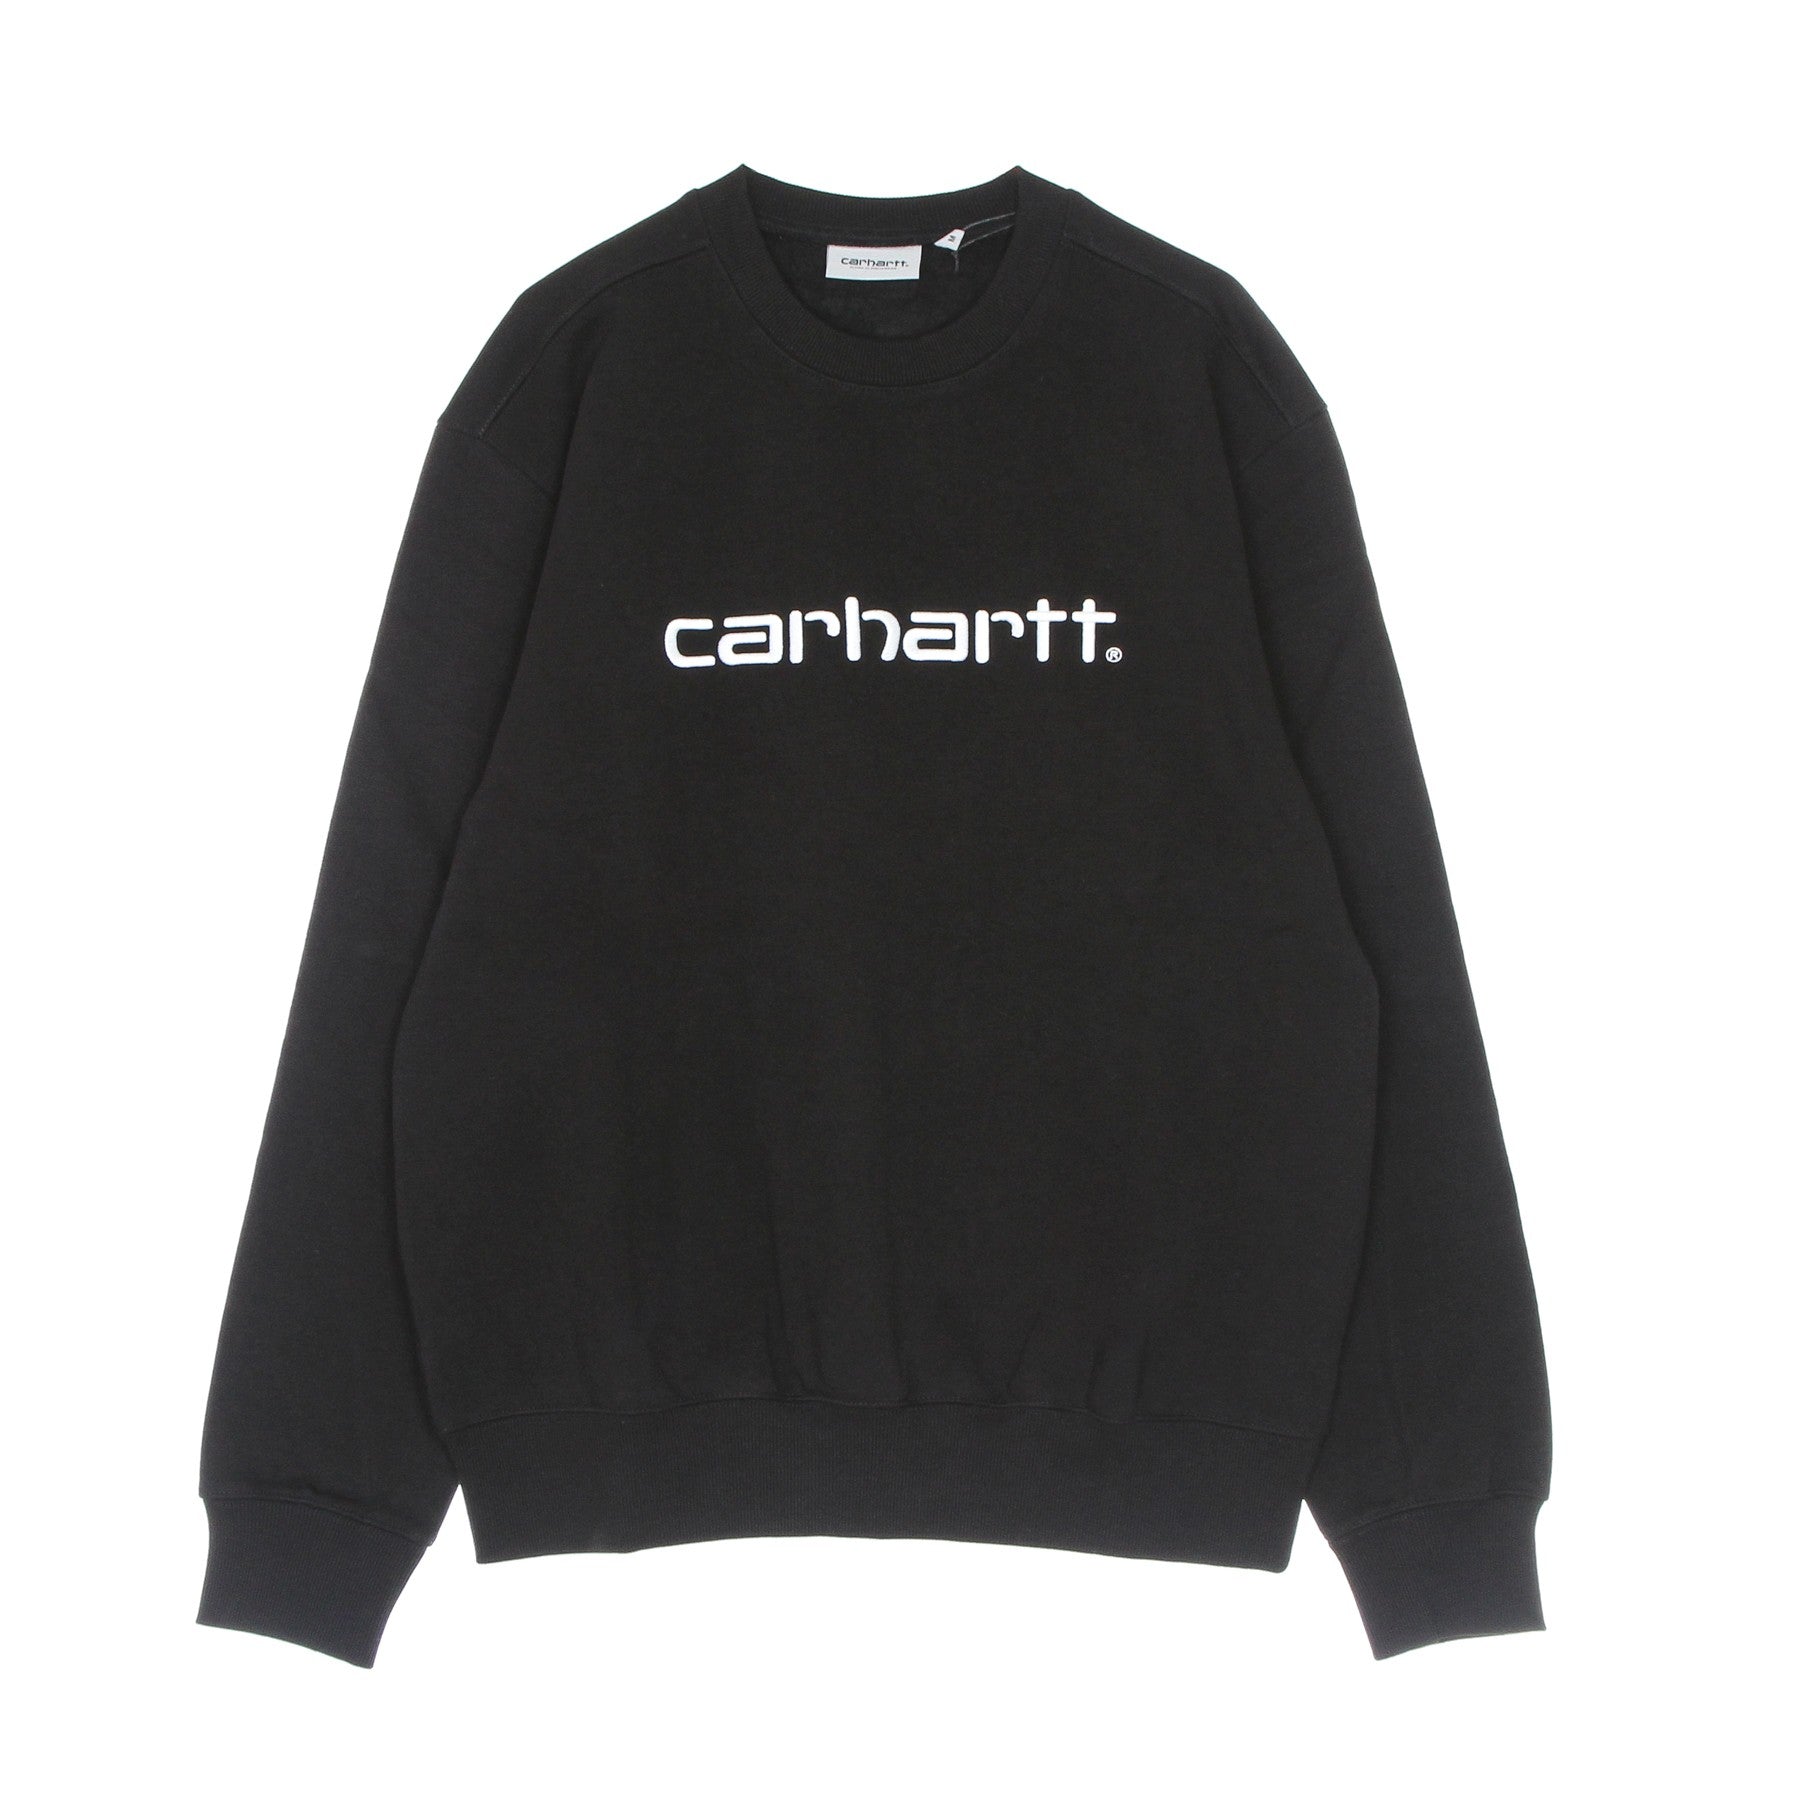 Carhartt Sweat Men's Crewneck Sweatshirt Black/white